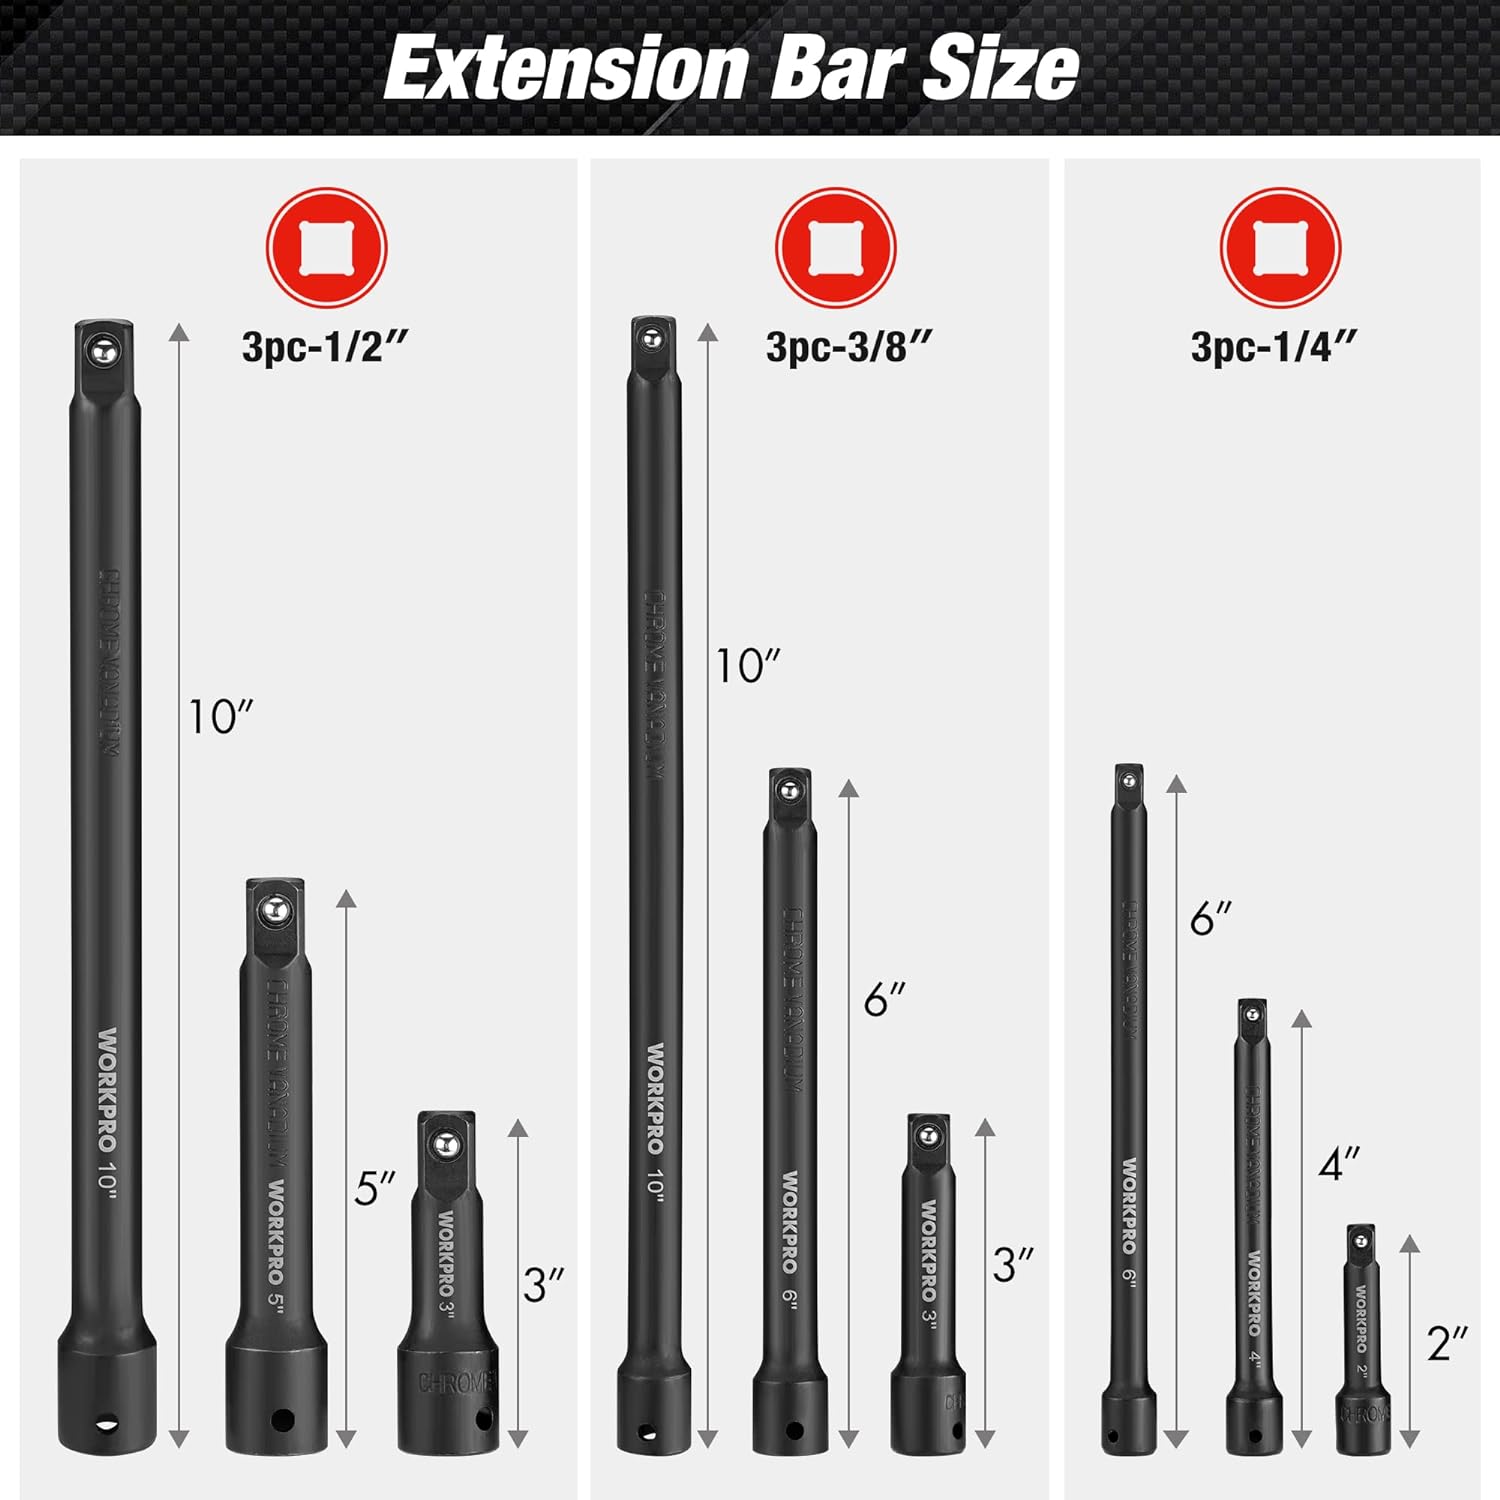 WORKPRO 9 PCS Impact Driver Extension Bar Set, 1/4", 3/8" and 1/2" Drive Socket Extension, Premium Chrome Vanadium Steel with…